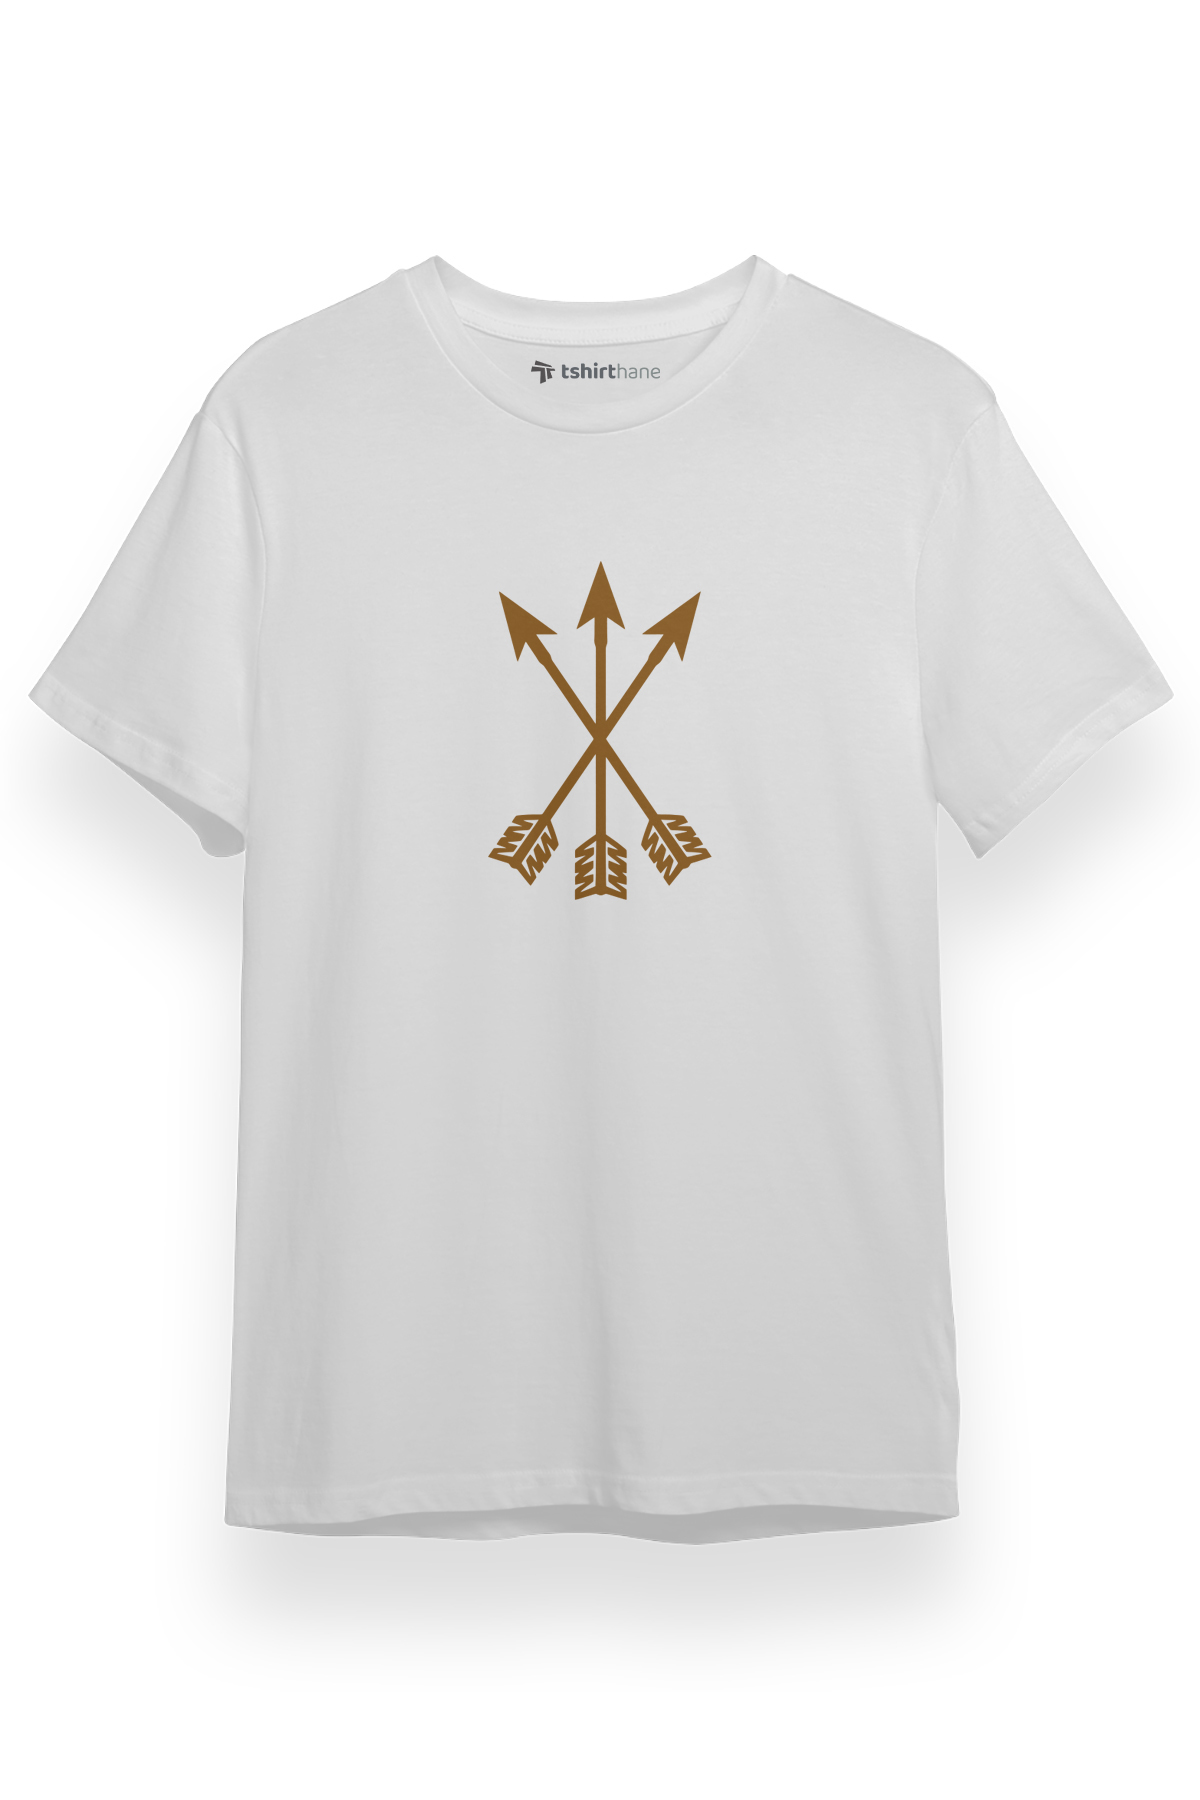 The Witcher Scoiatael Arrows Beyaz Kısa kol Erkek Tshirt